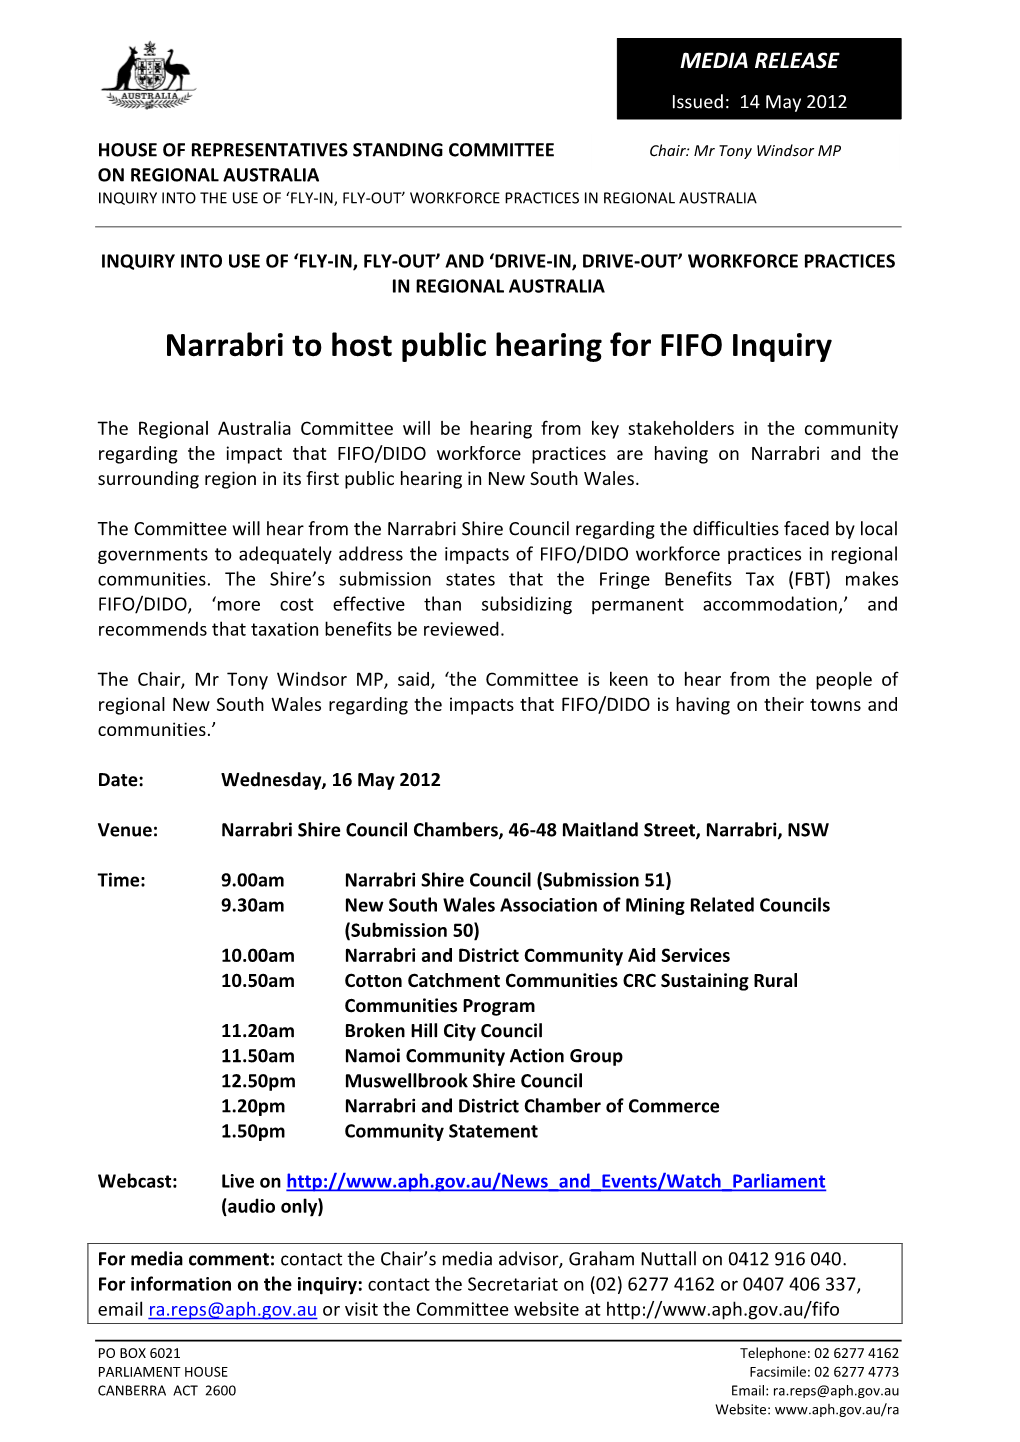 Narrabri to Host Public Hearing for FIFO Inquiry